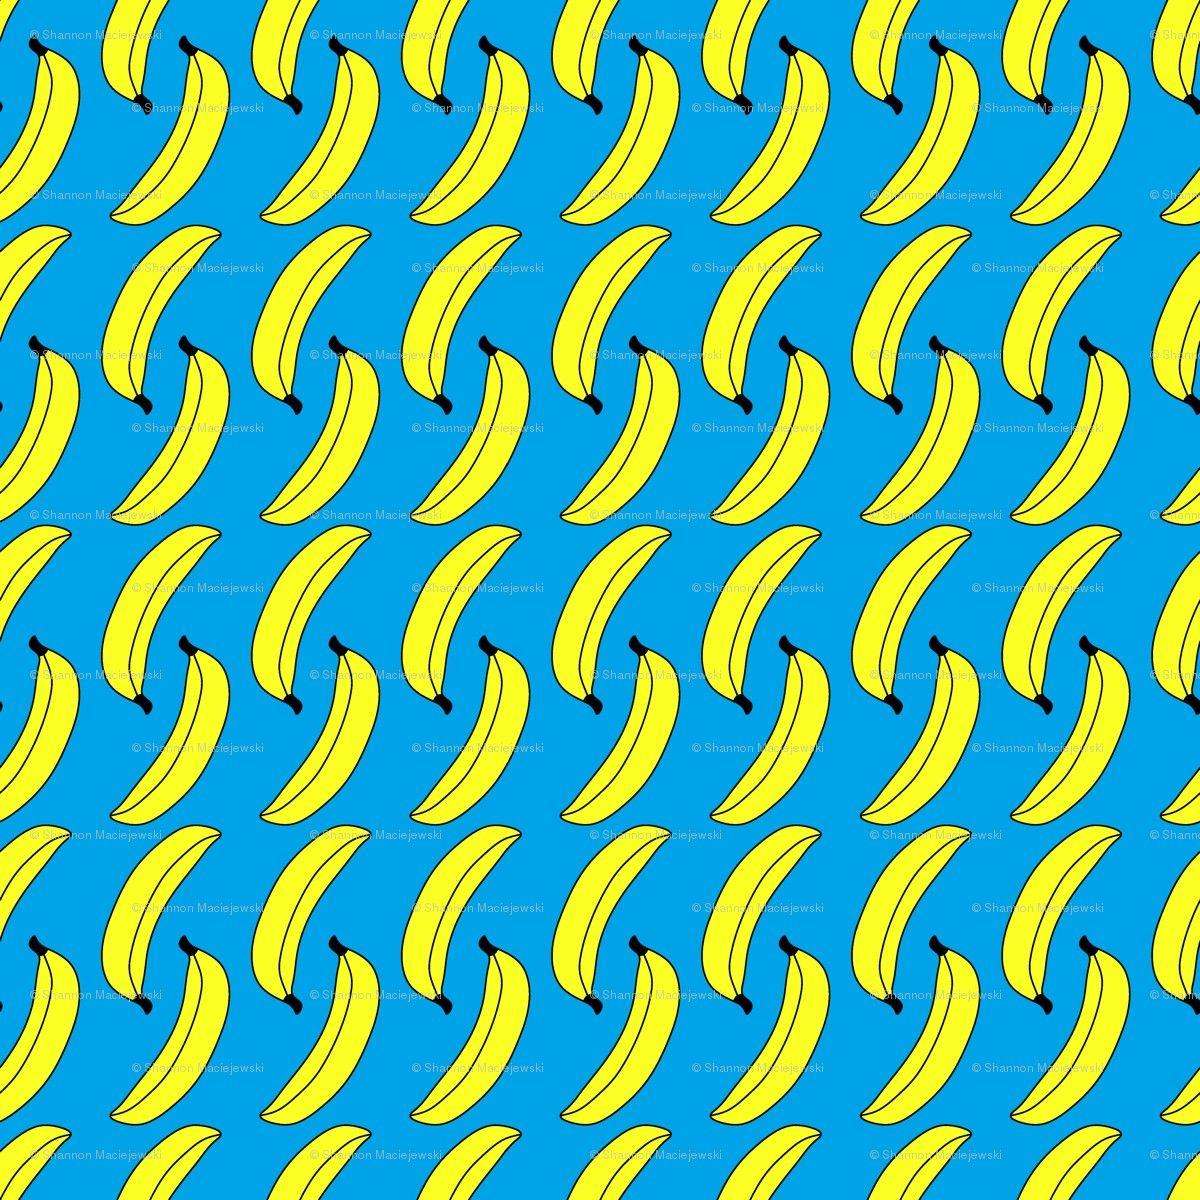 Bananas Movie Wallpaper